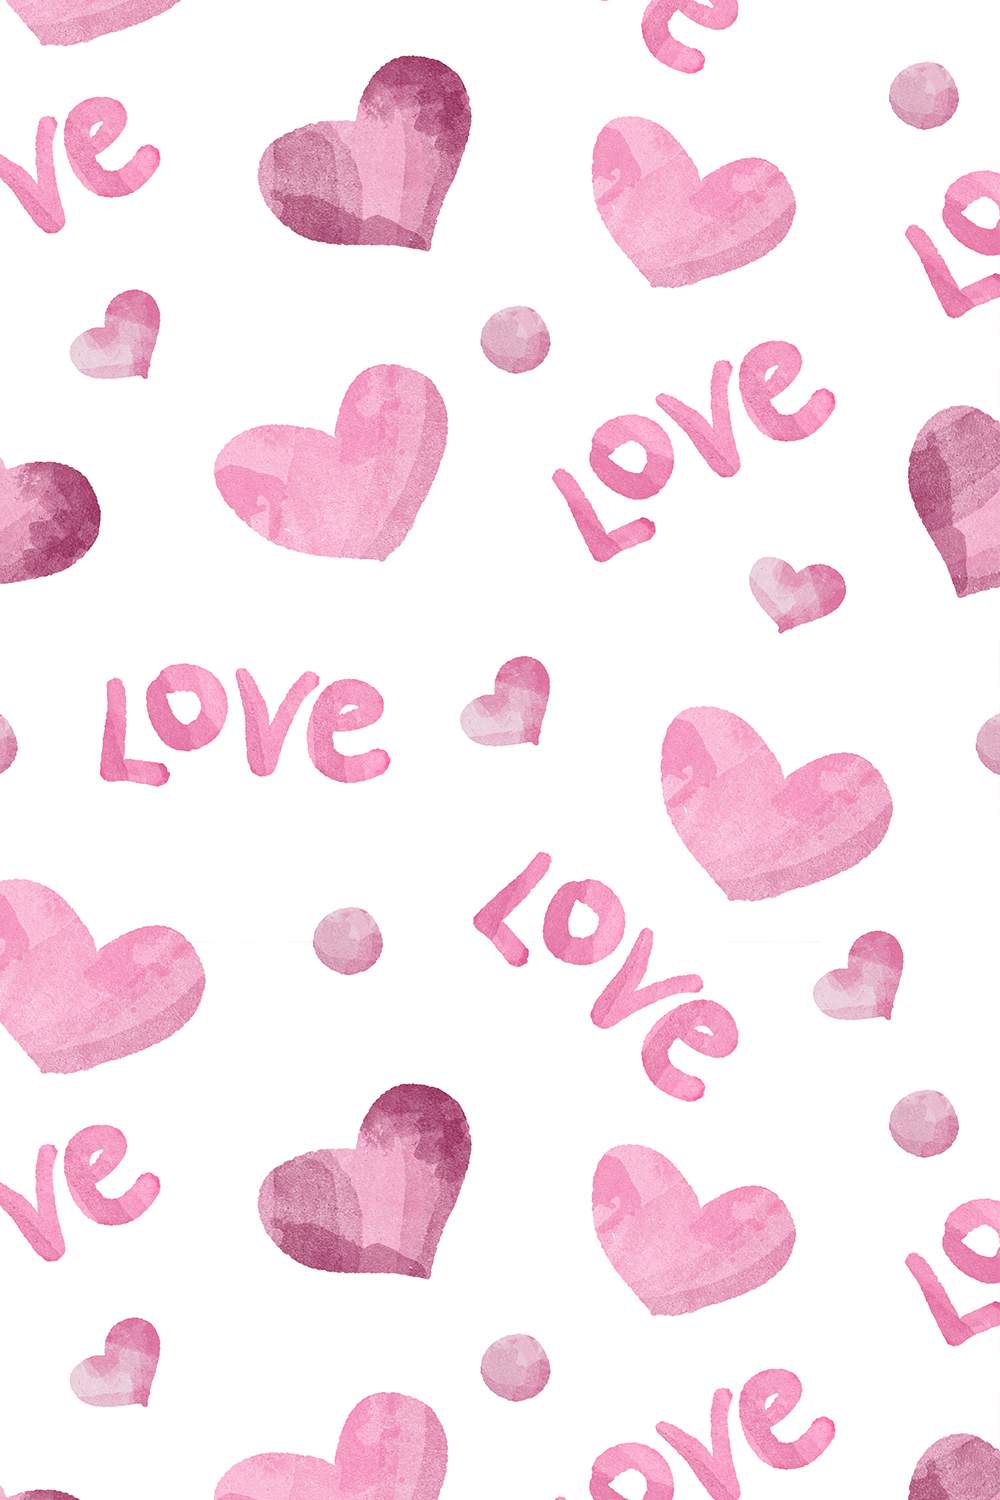 LOVE U Valentine Hearts Seamless Pattern pinterest preview image.